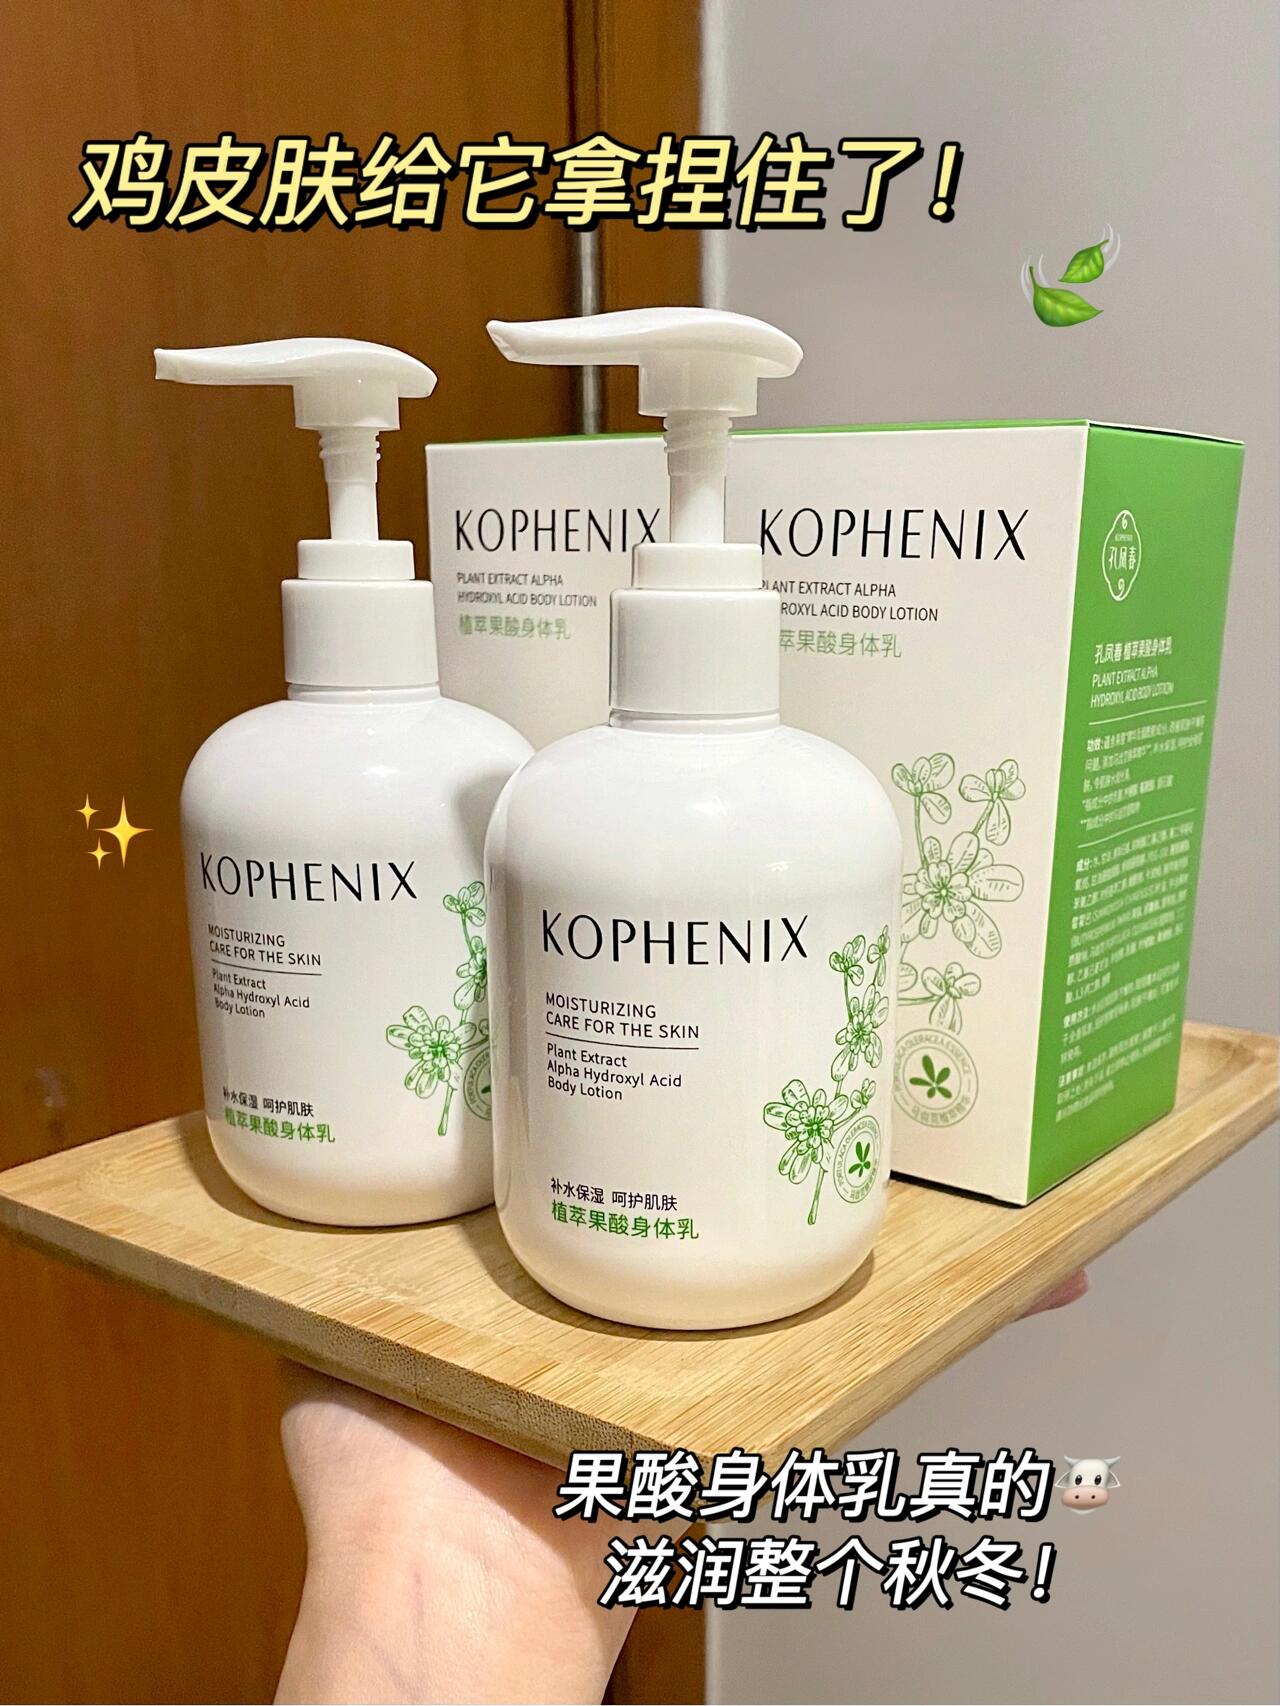 KOPHENIX Plant Extract Moisturizing AHA Body Lotion 245g 孔凤春植萃保湿果酸身体乳